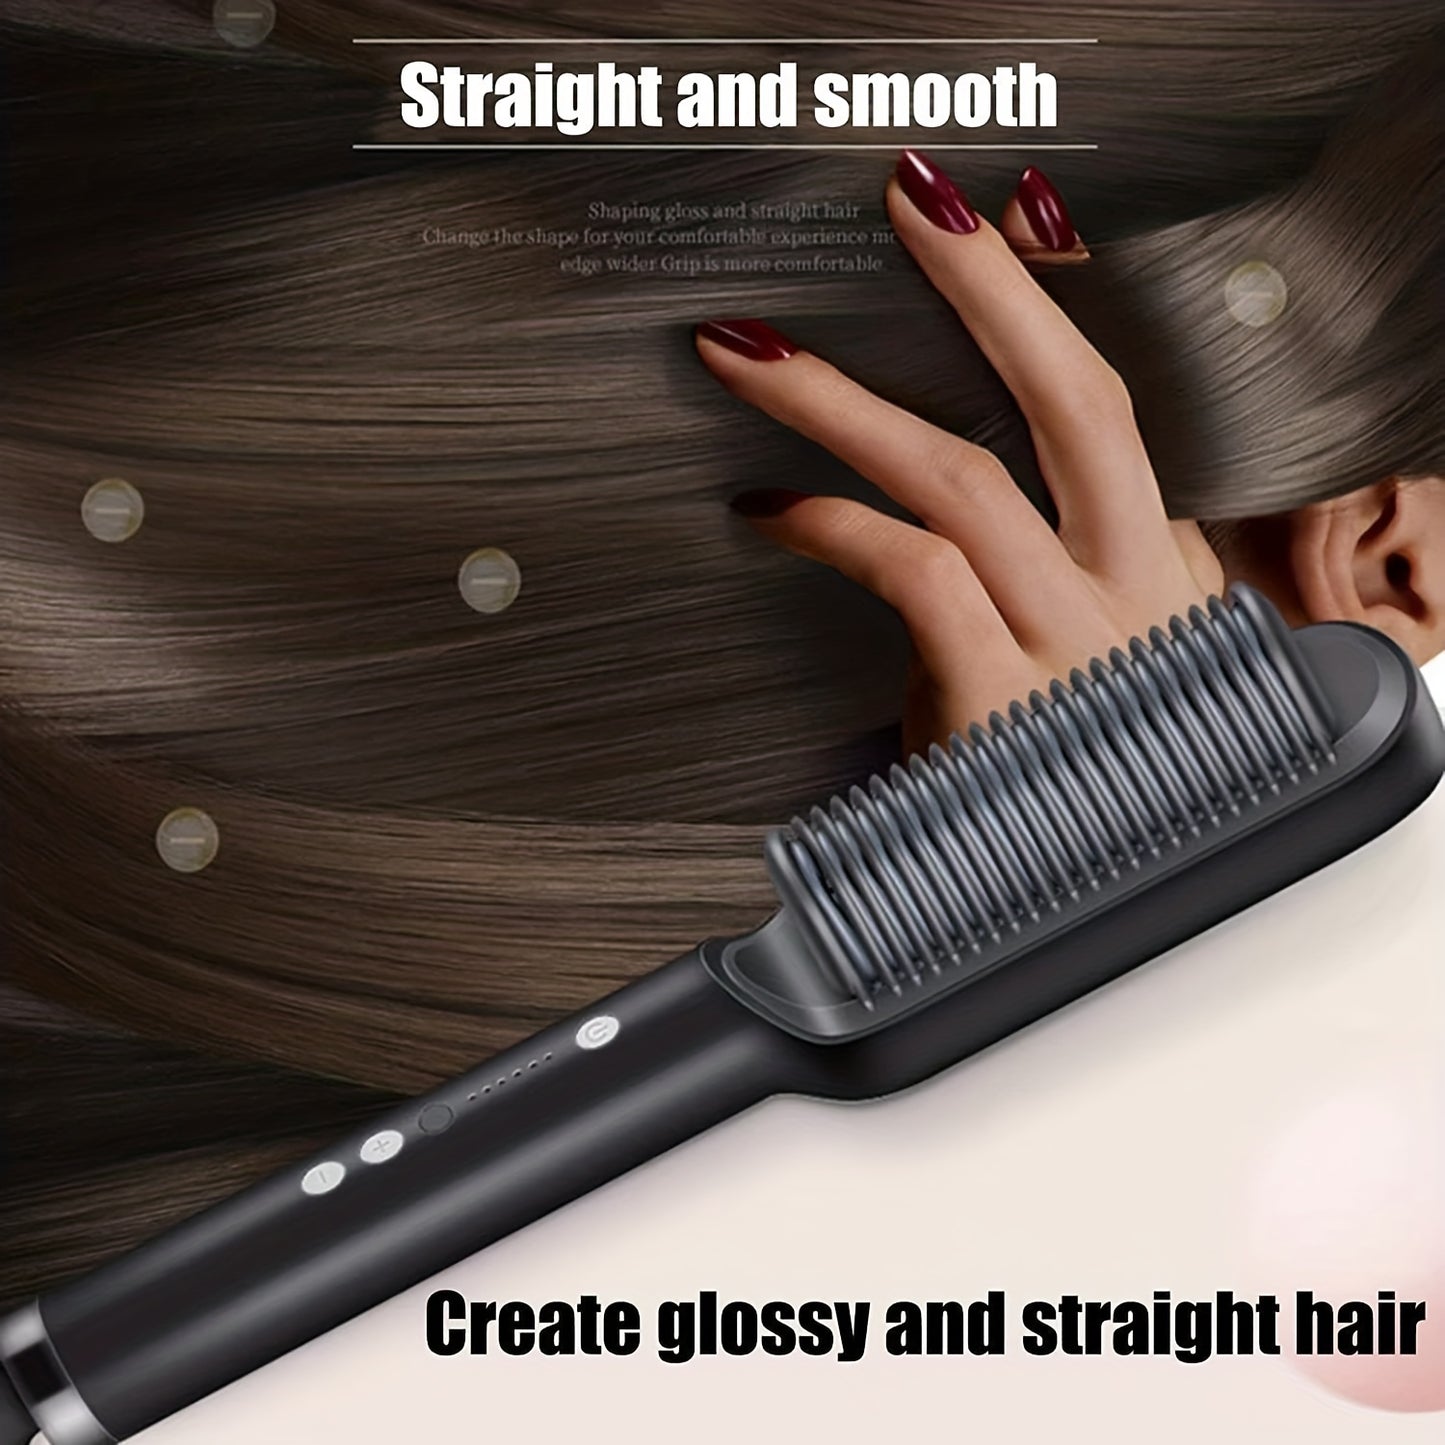 2-in-1 Electric Hair Straightener Brush